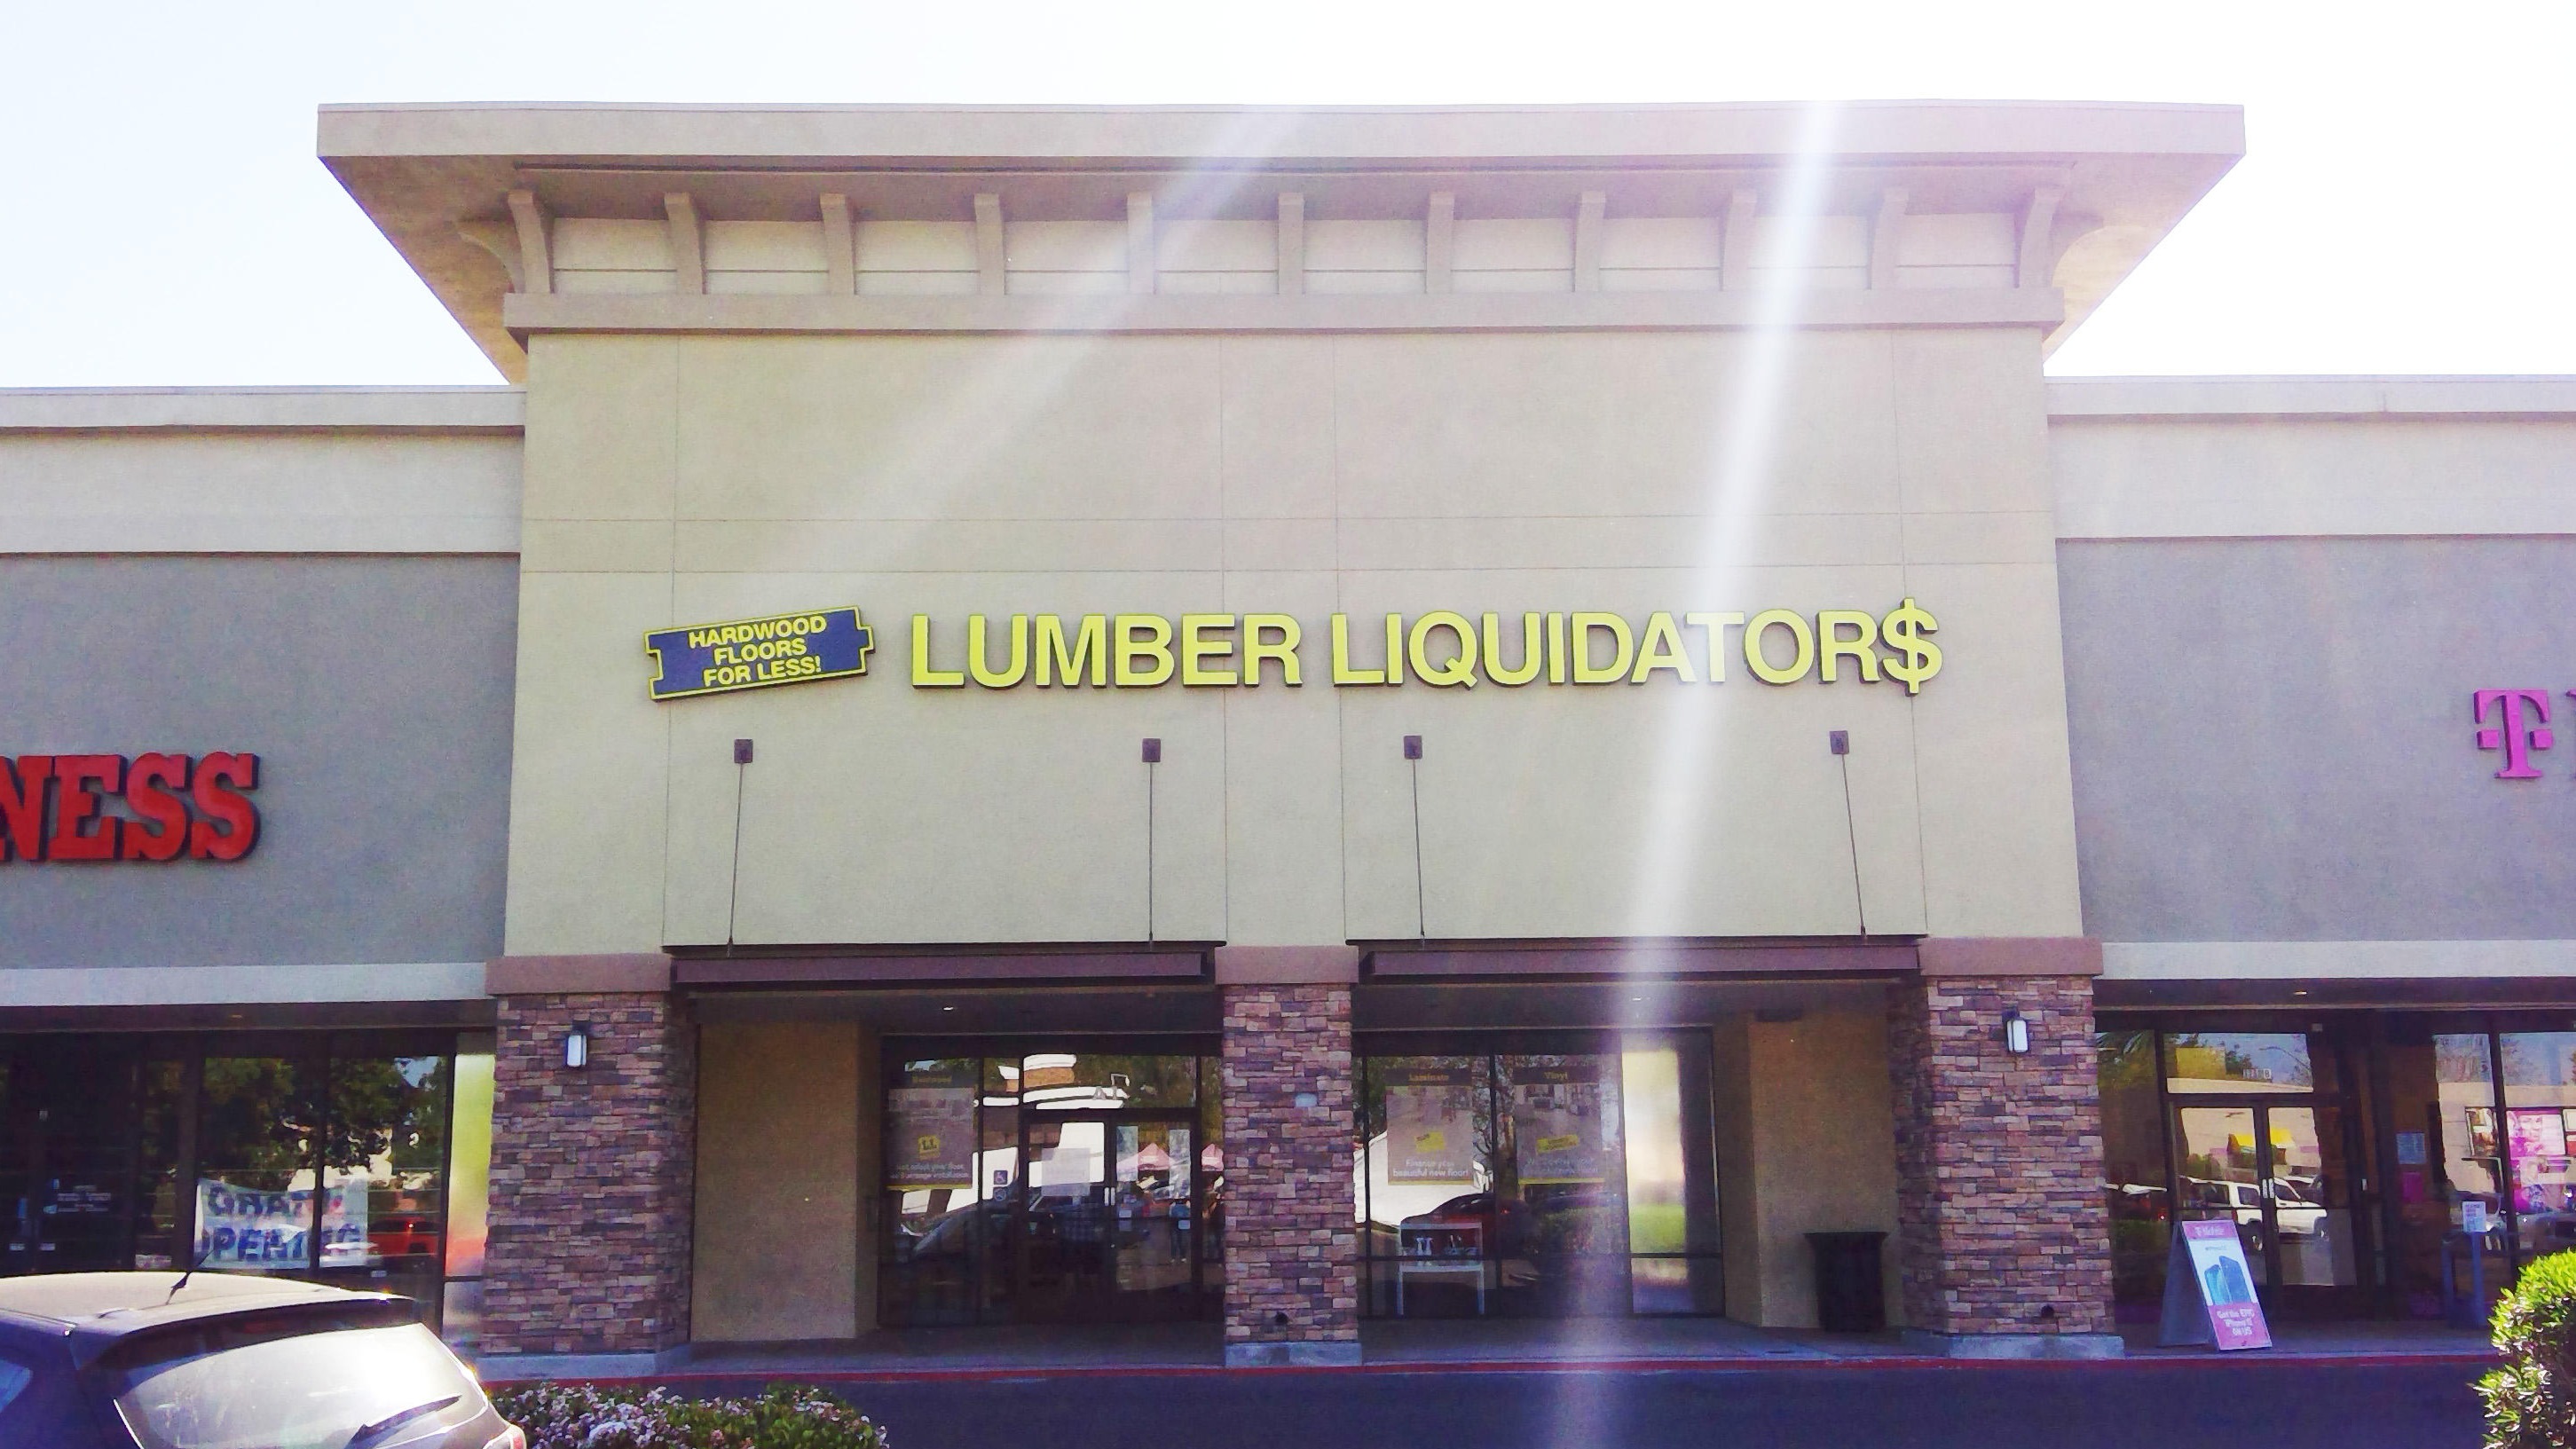 Ll Flooring Lumber Liquidators 1235, Lumber Liquidators Flooring Stockton Ca